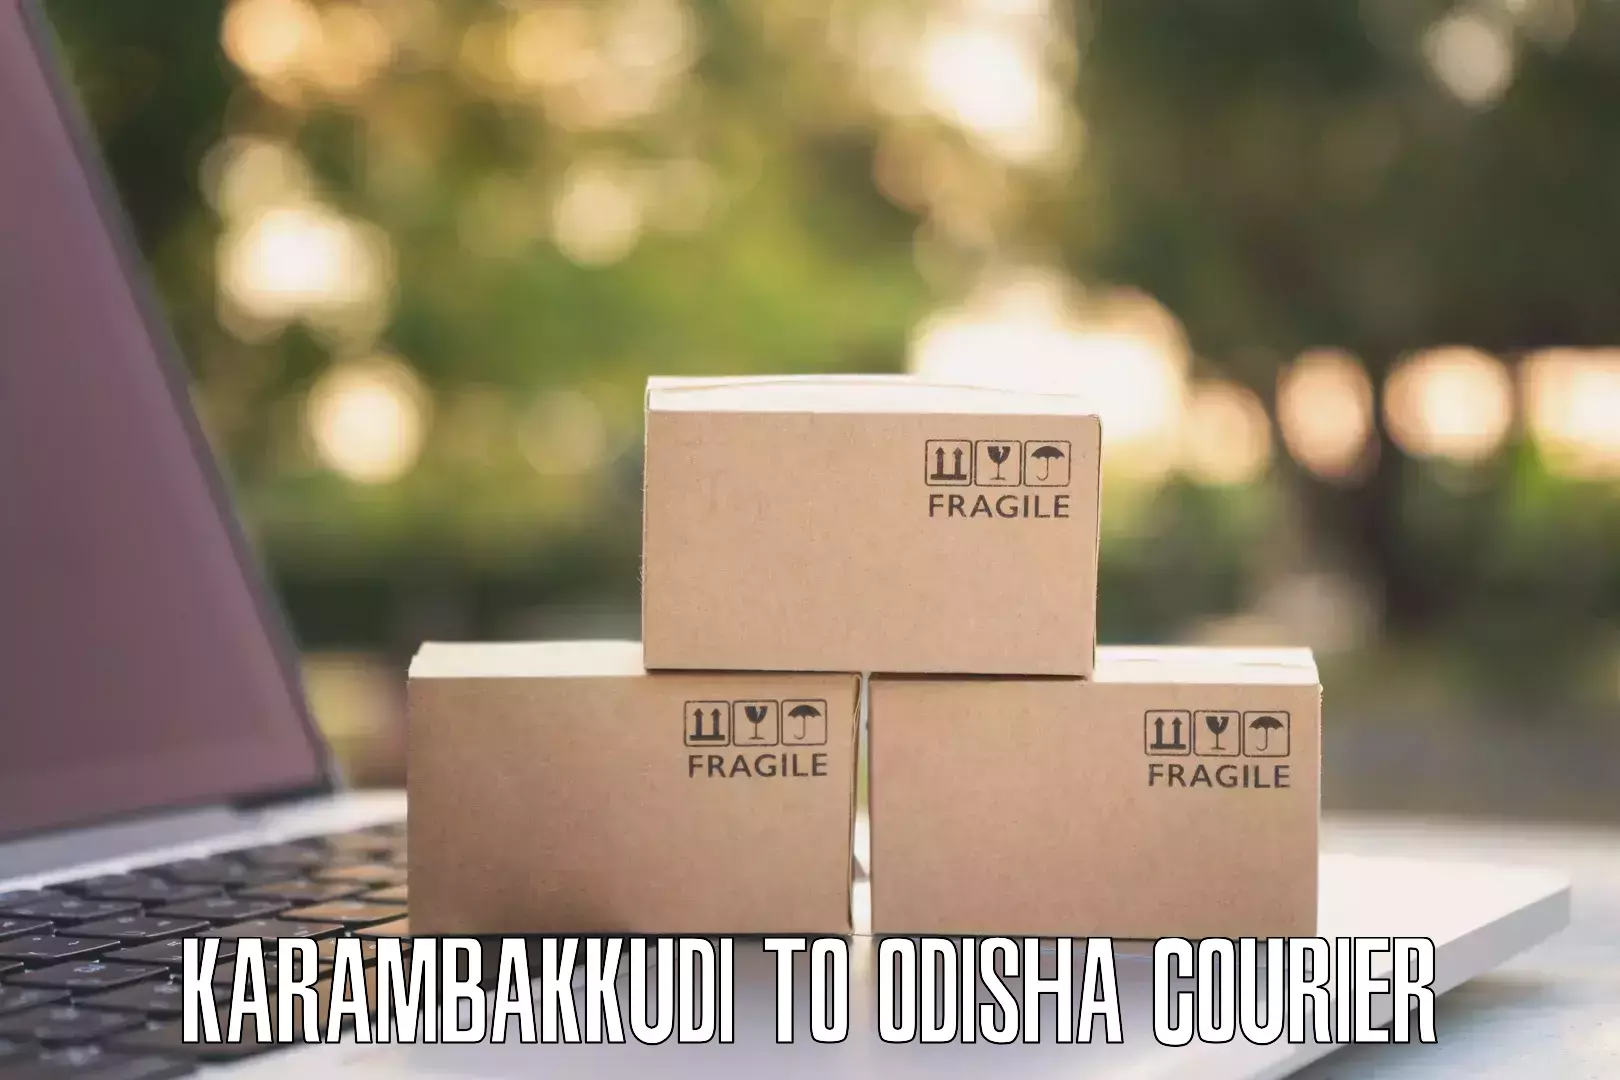 Premium courier services in Karambakkudi to Odisha